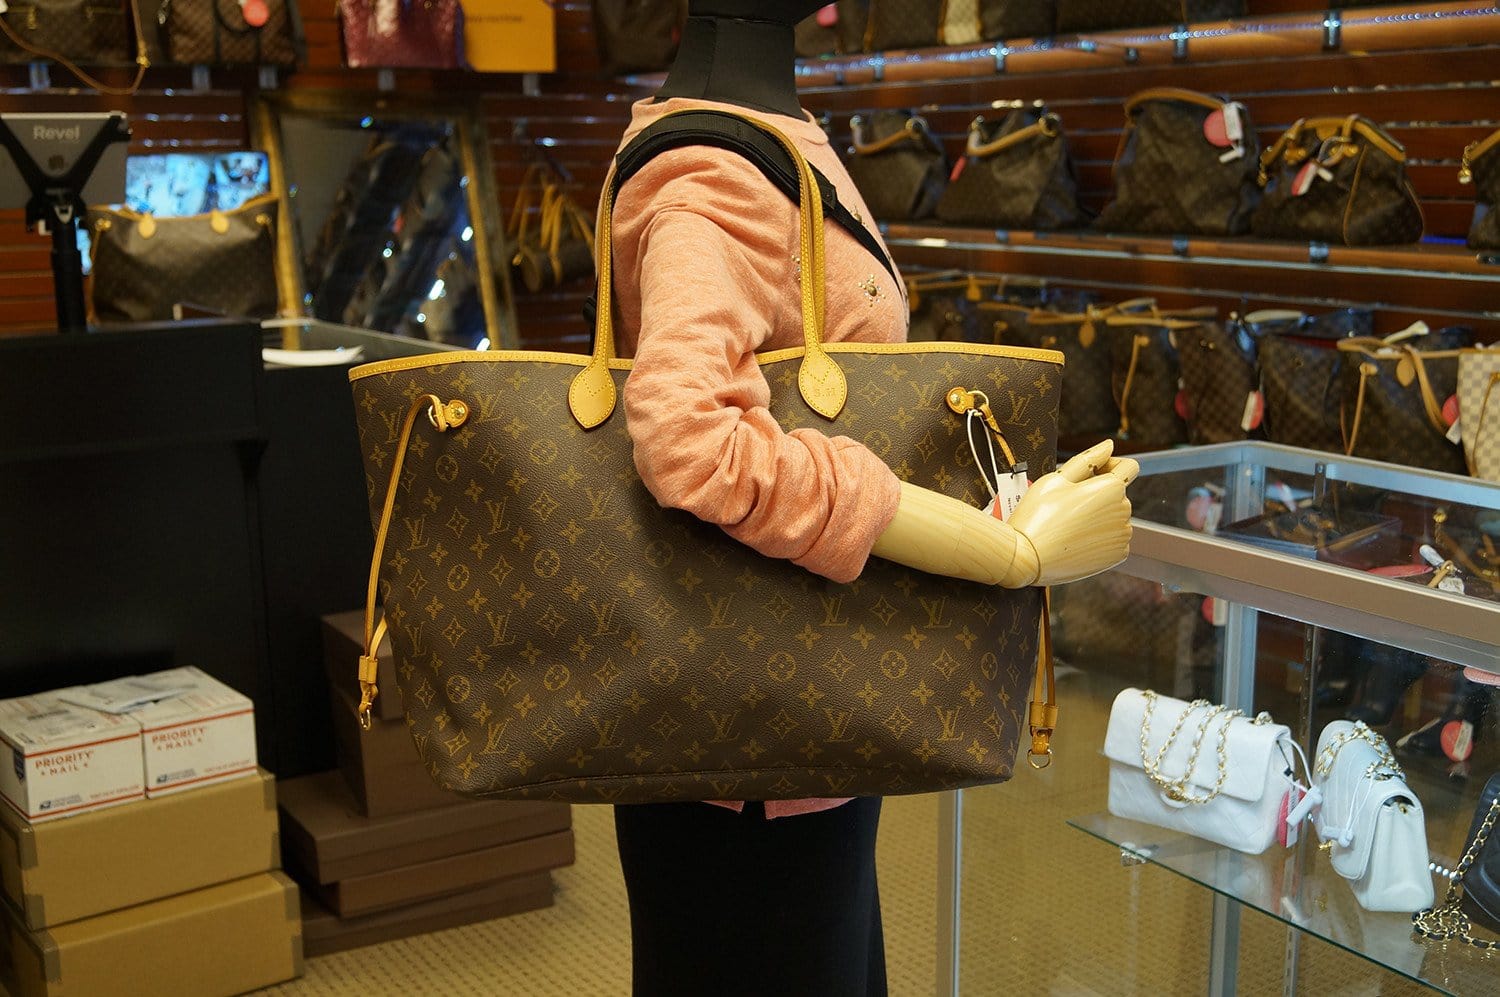 Louis Vuitton Bags & Louis Vuitton Neverfull GM Handbags for Women, Authenticity Guaranteed